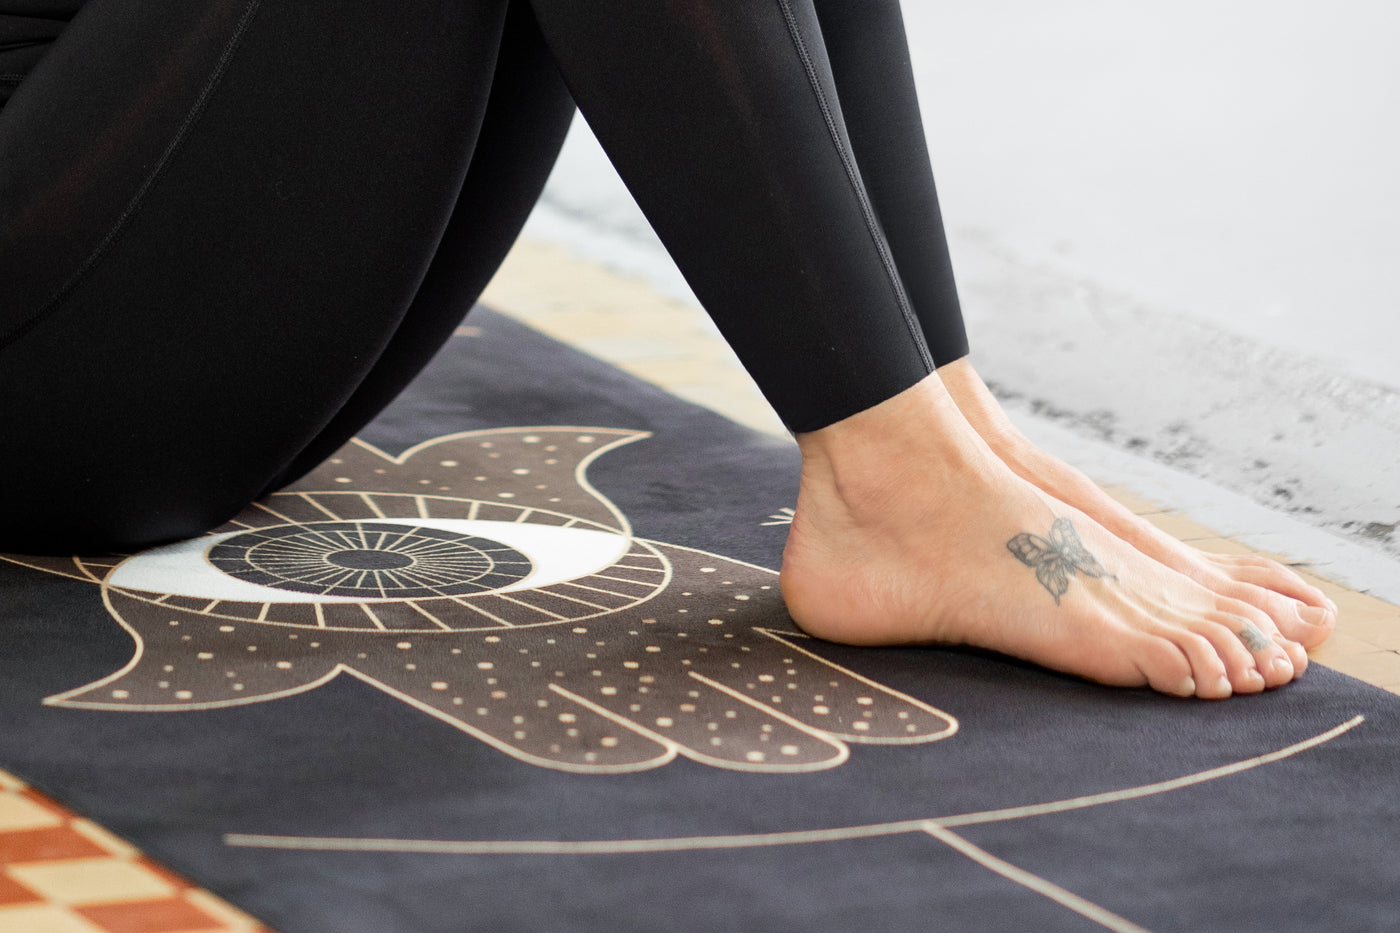 Yoga mat ILLUMINATION - natural rubber, non-slip, eco-friendly studio gym, pilates and yoga mat